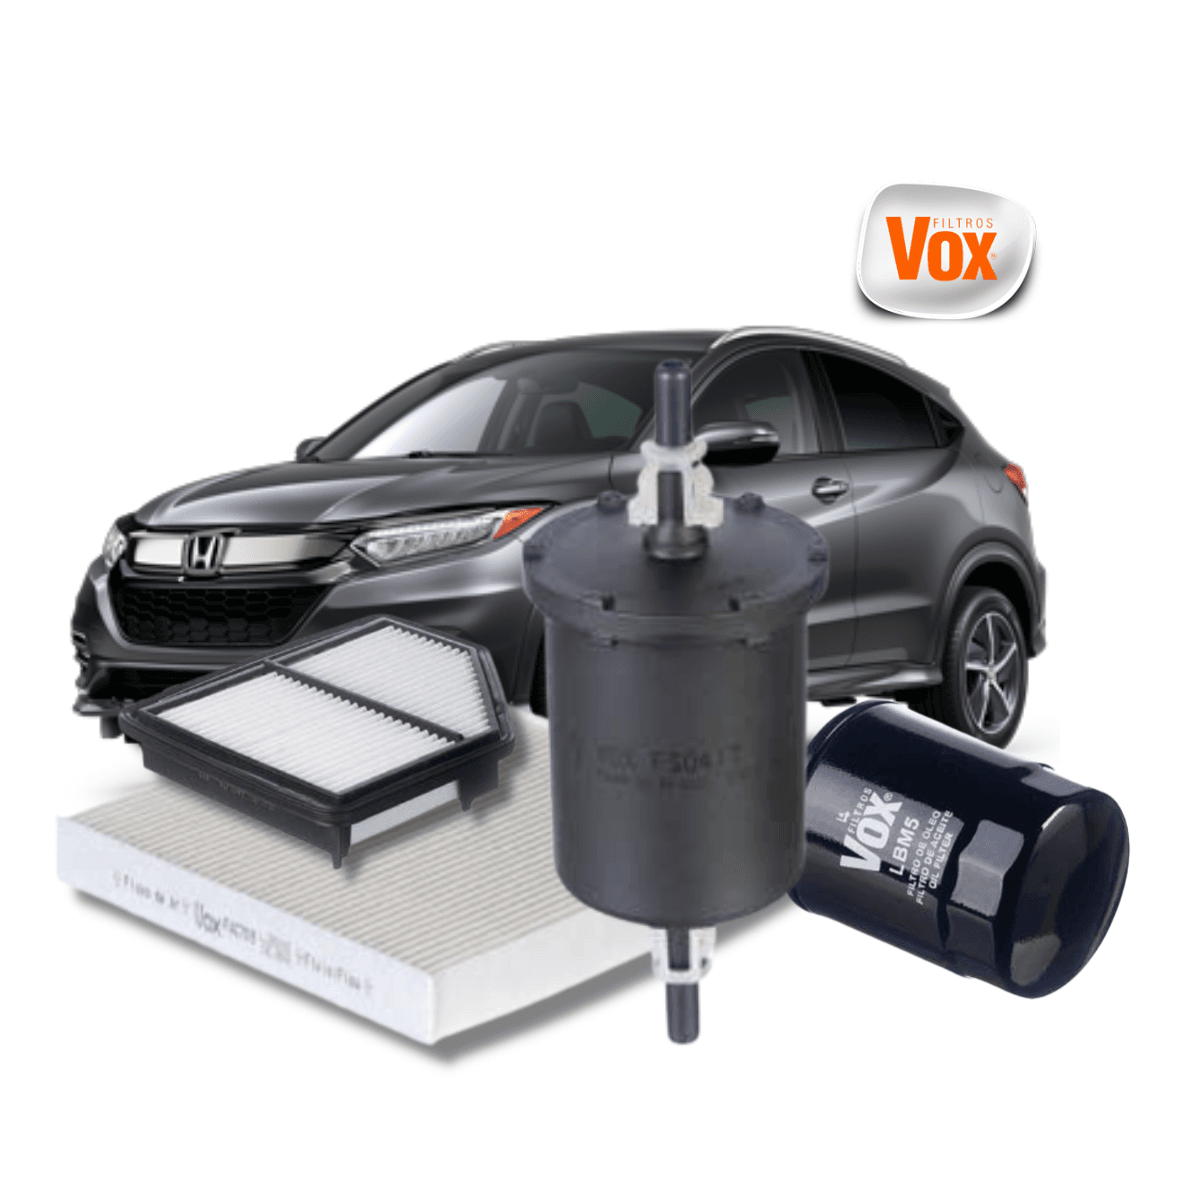 Kit Reparo Honda HRV - Filtros VOX Filters origina...